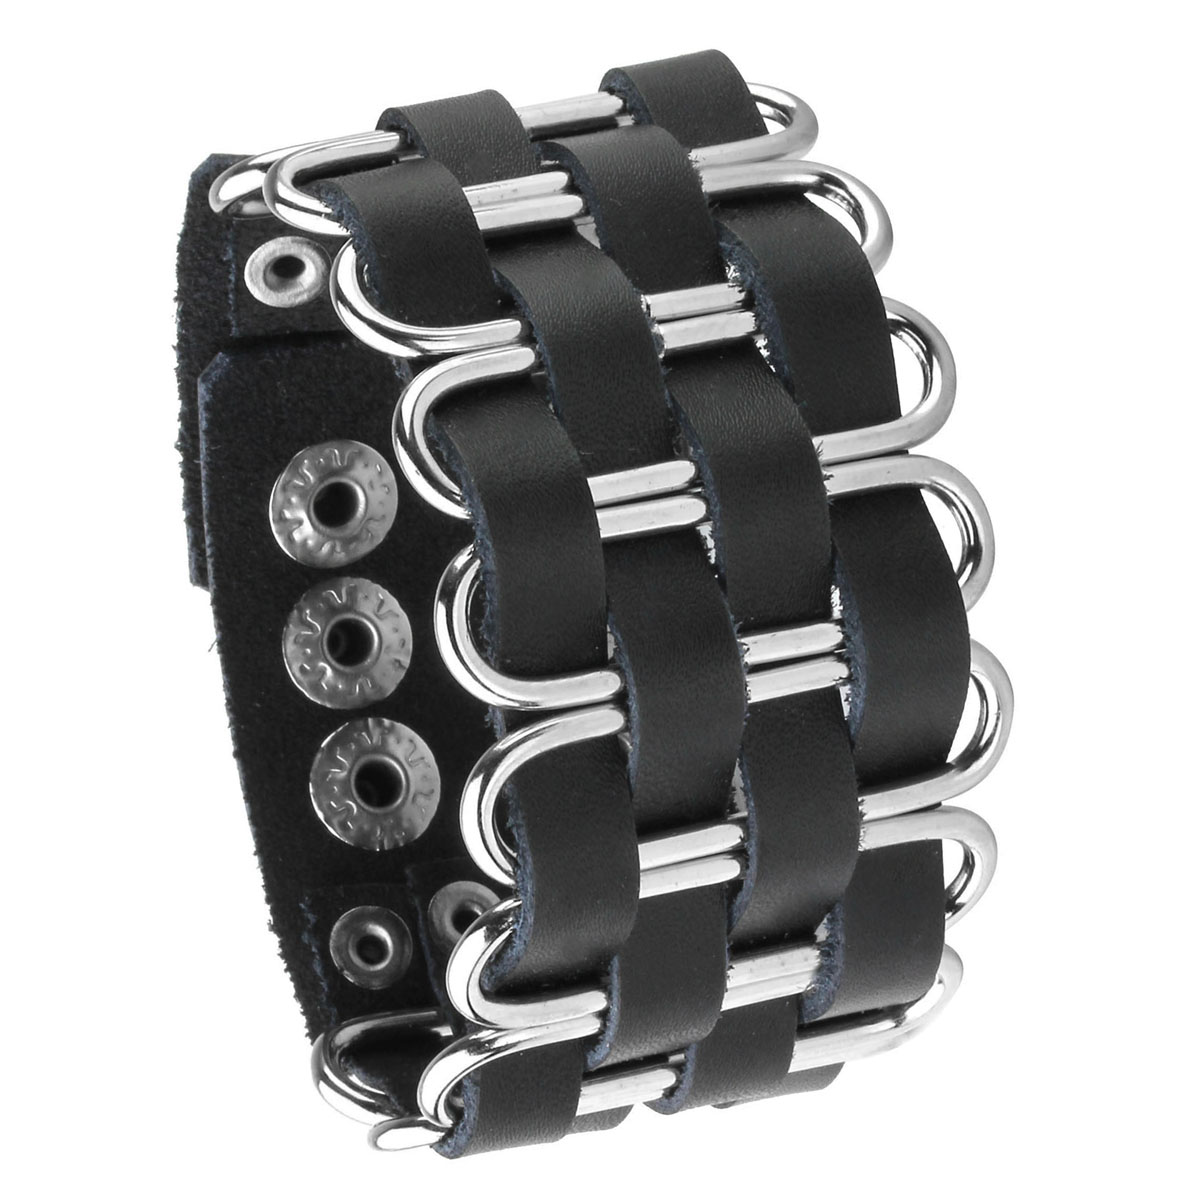 Goth style alloy bracelet faux leather biker wide woven buckle cuff wristband